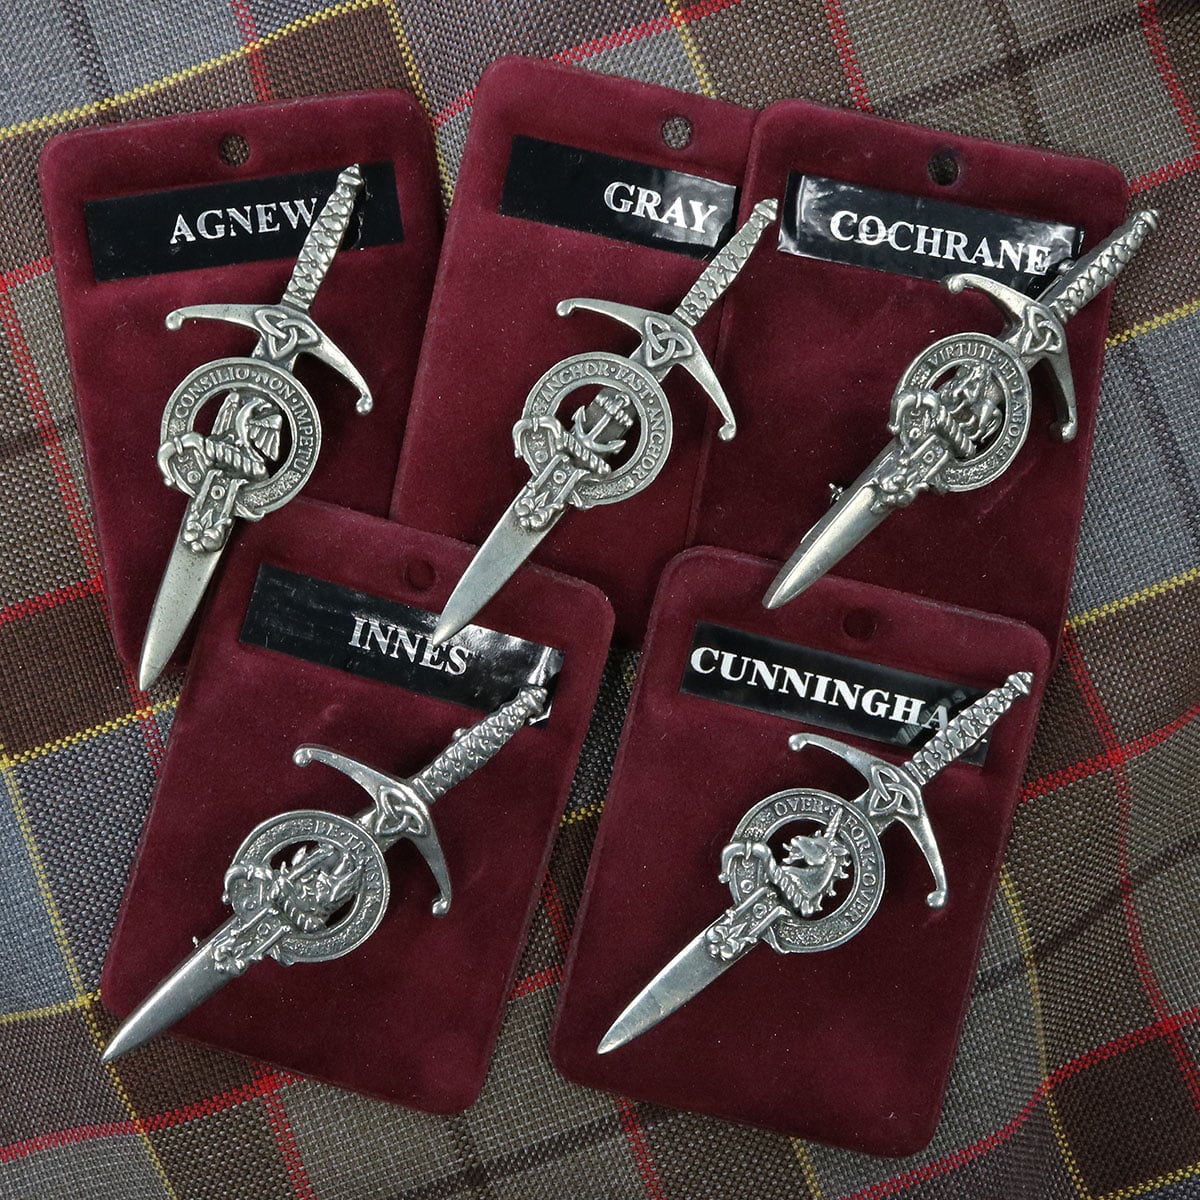 Leask Scottish Clan Dirk Shield Kilt Pin